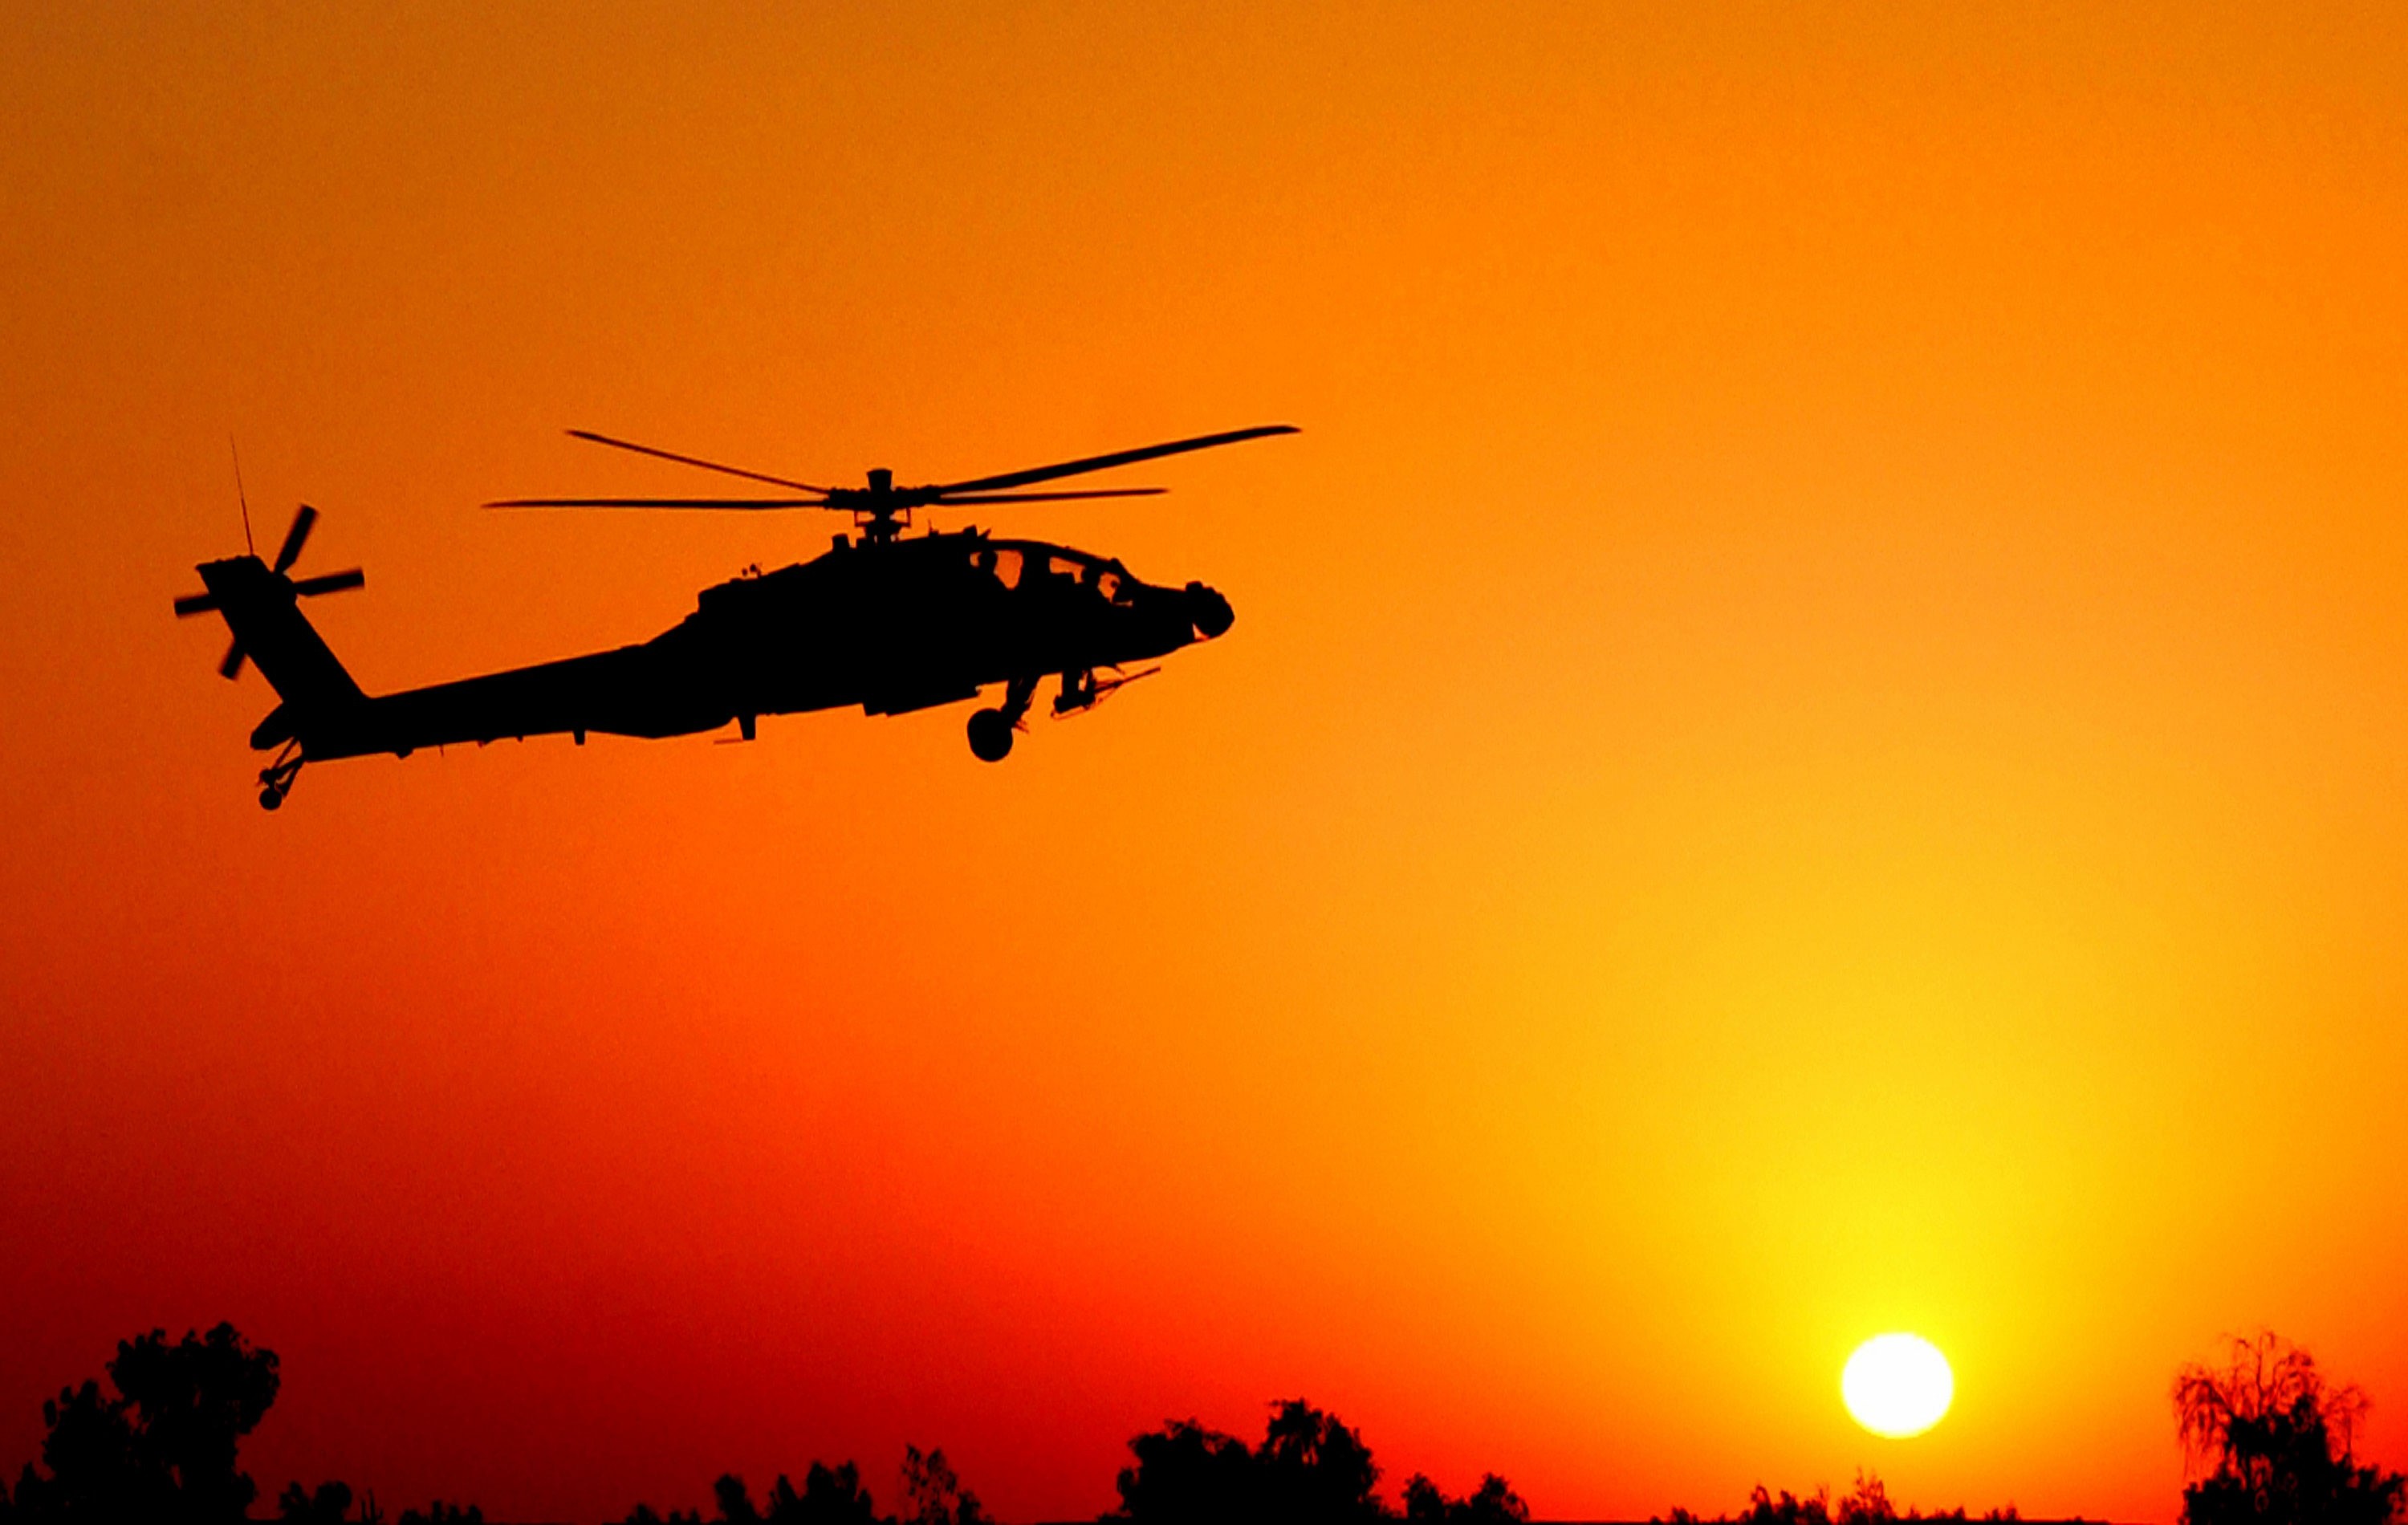 Flight of the Conchords, Air, Aircraft, AH 64 Apache, Sunset Wallpaper